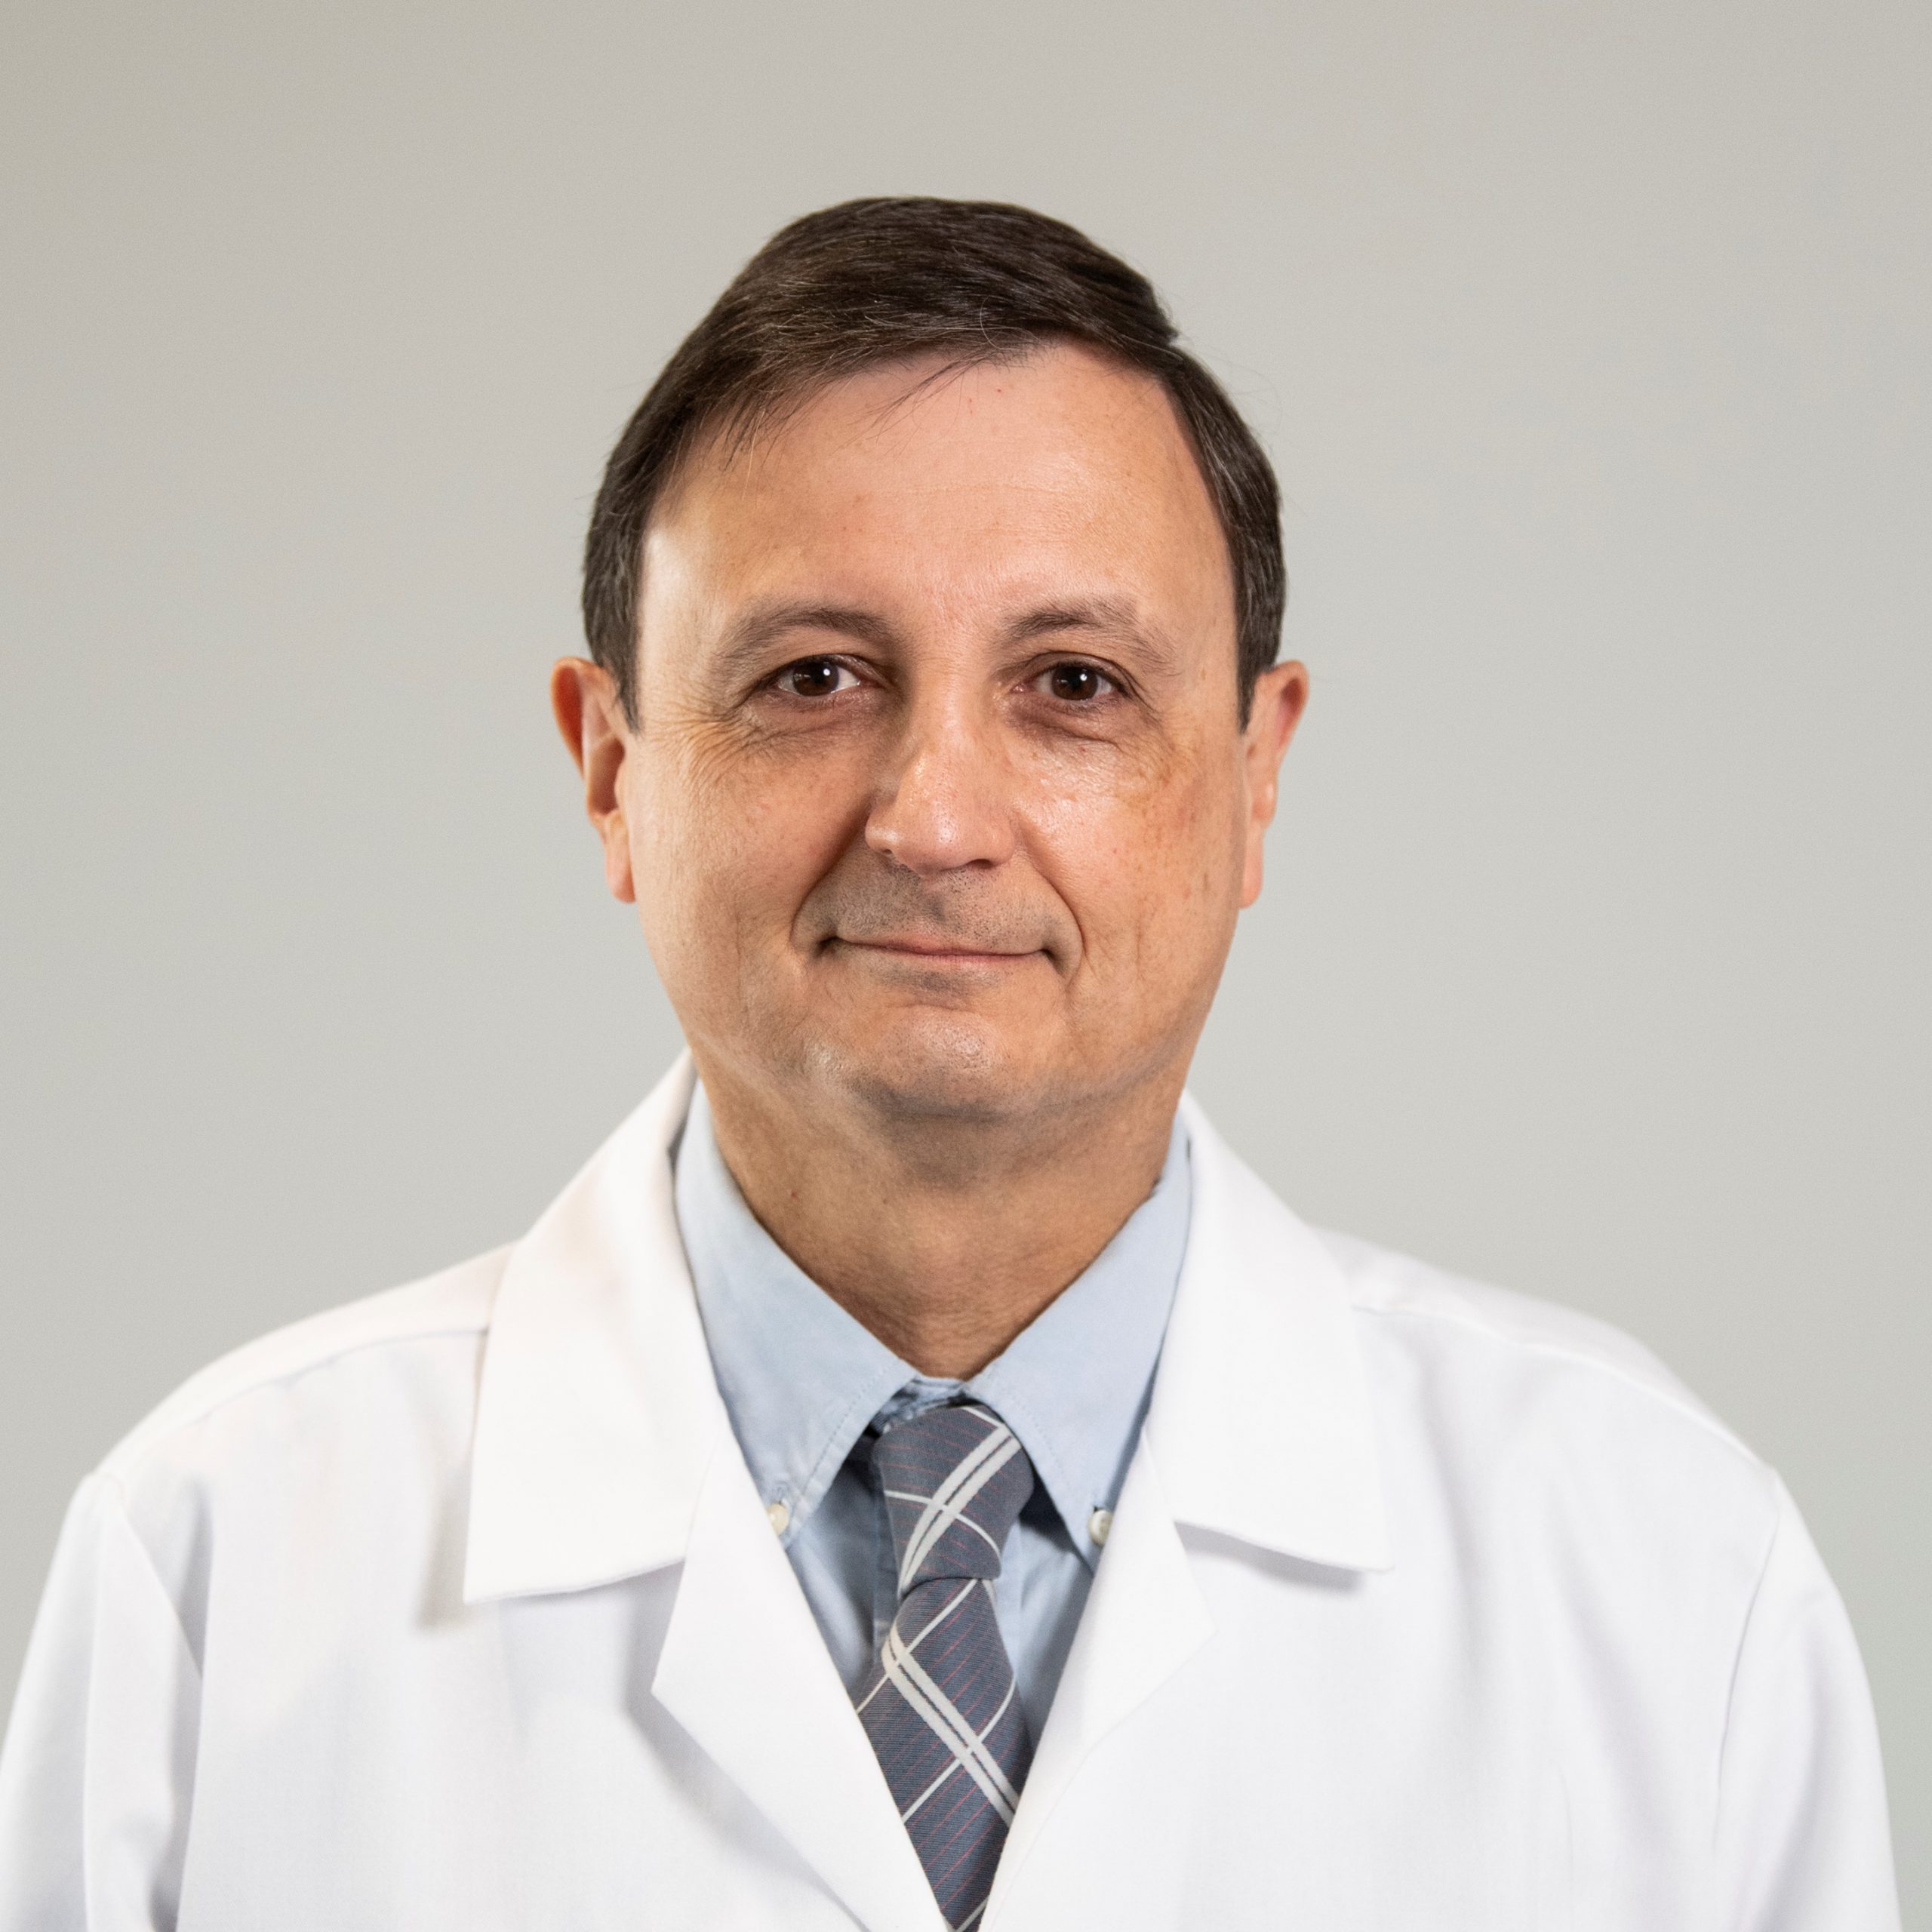 Dr. Adrian Morelli